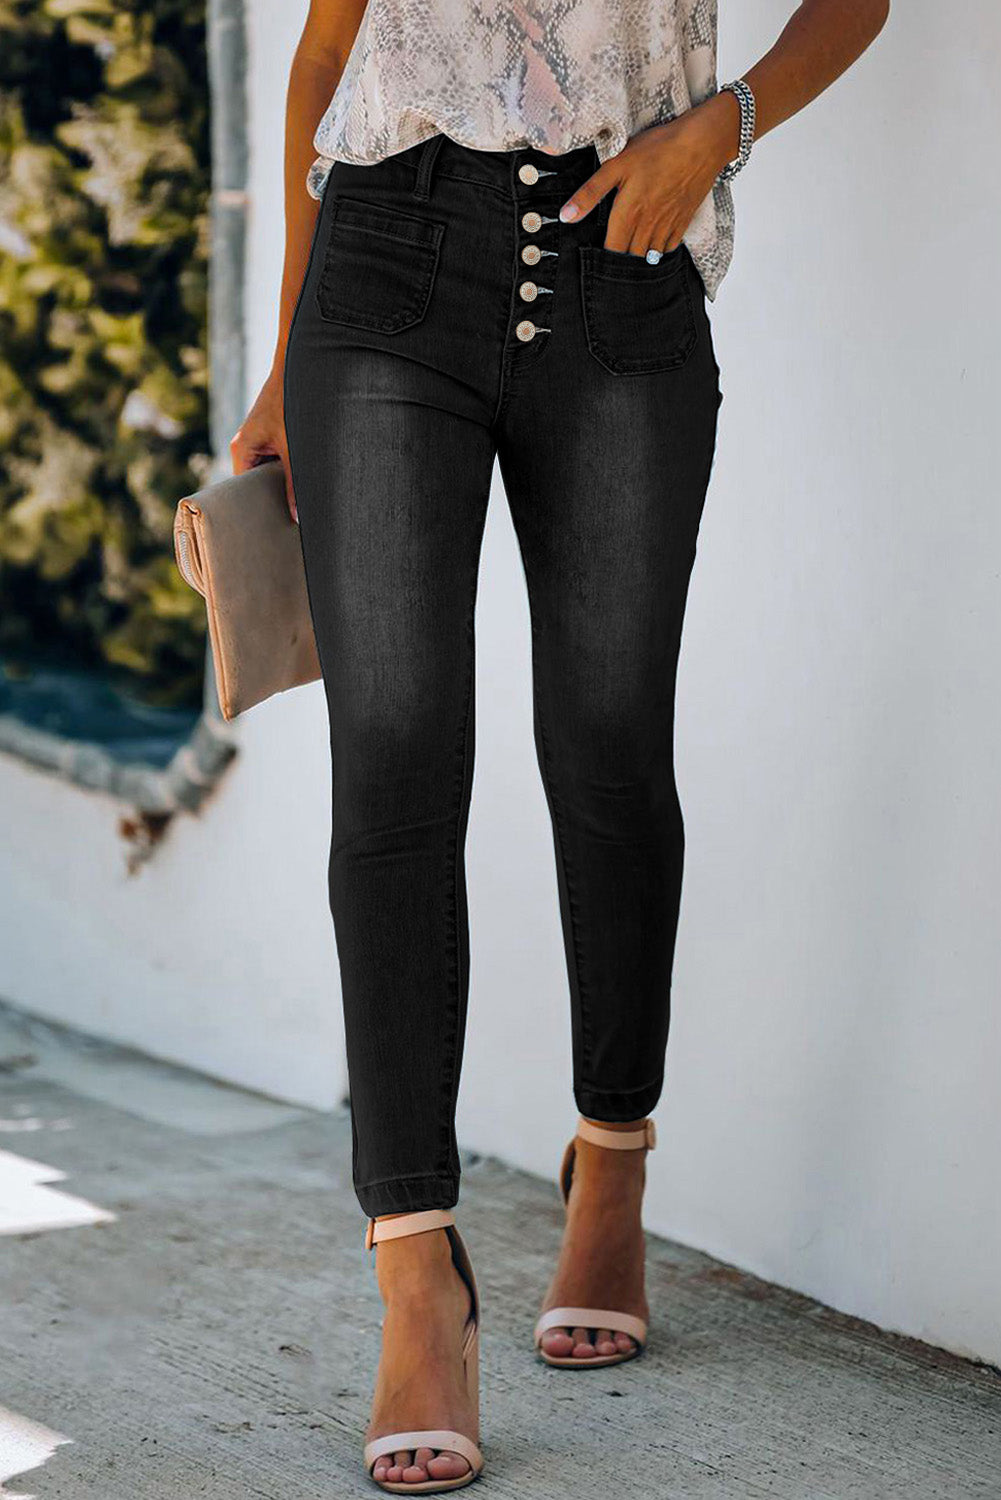 Black Button Fly Skinny Jeans with Pockets Black Jeans JT's Designer Fashion